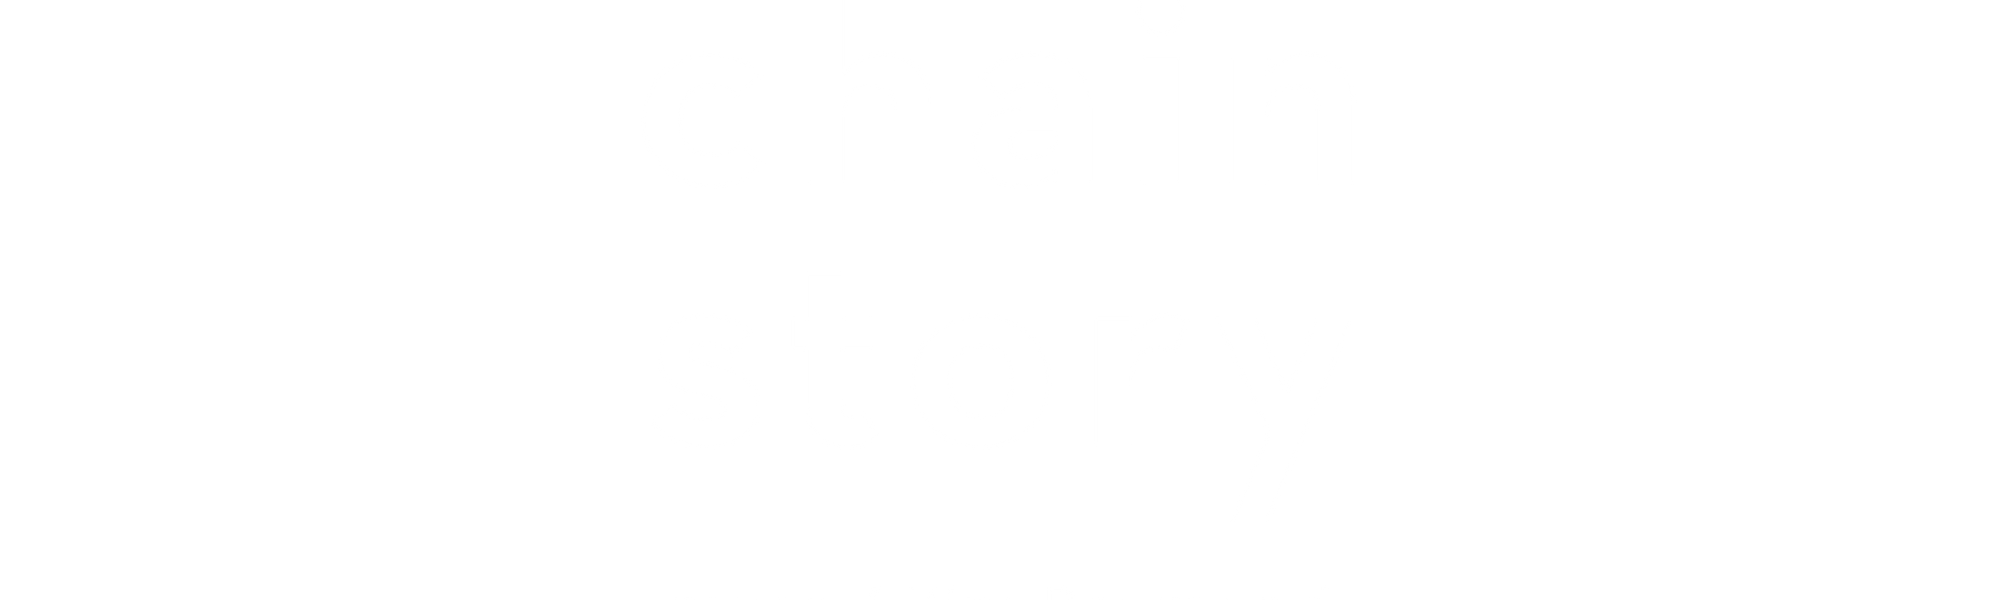 Chain Story 1